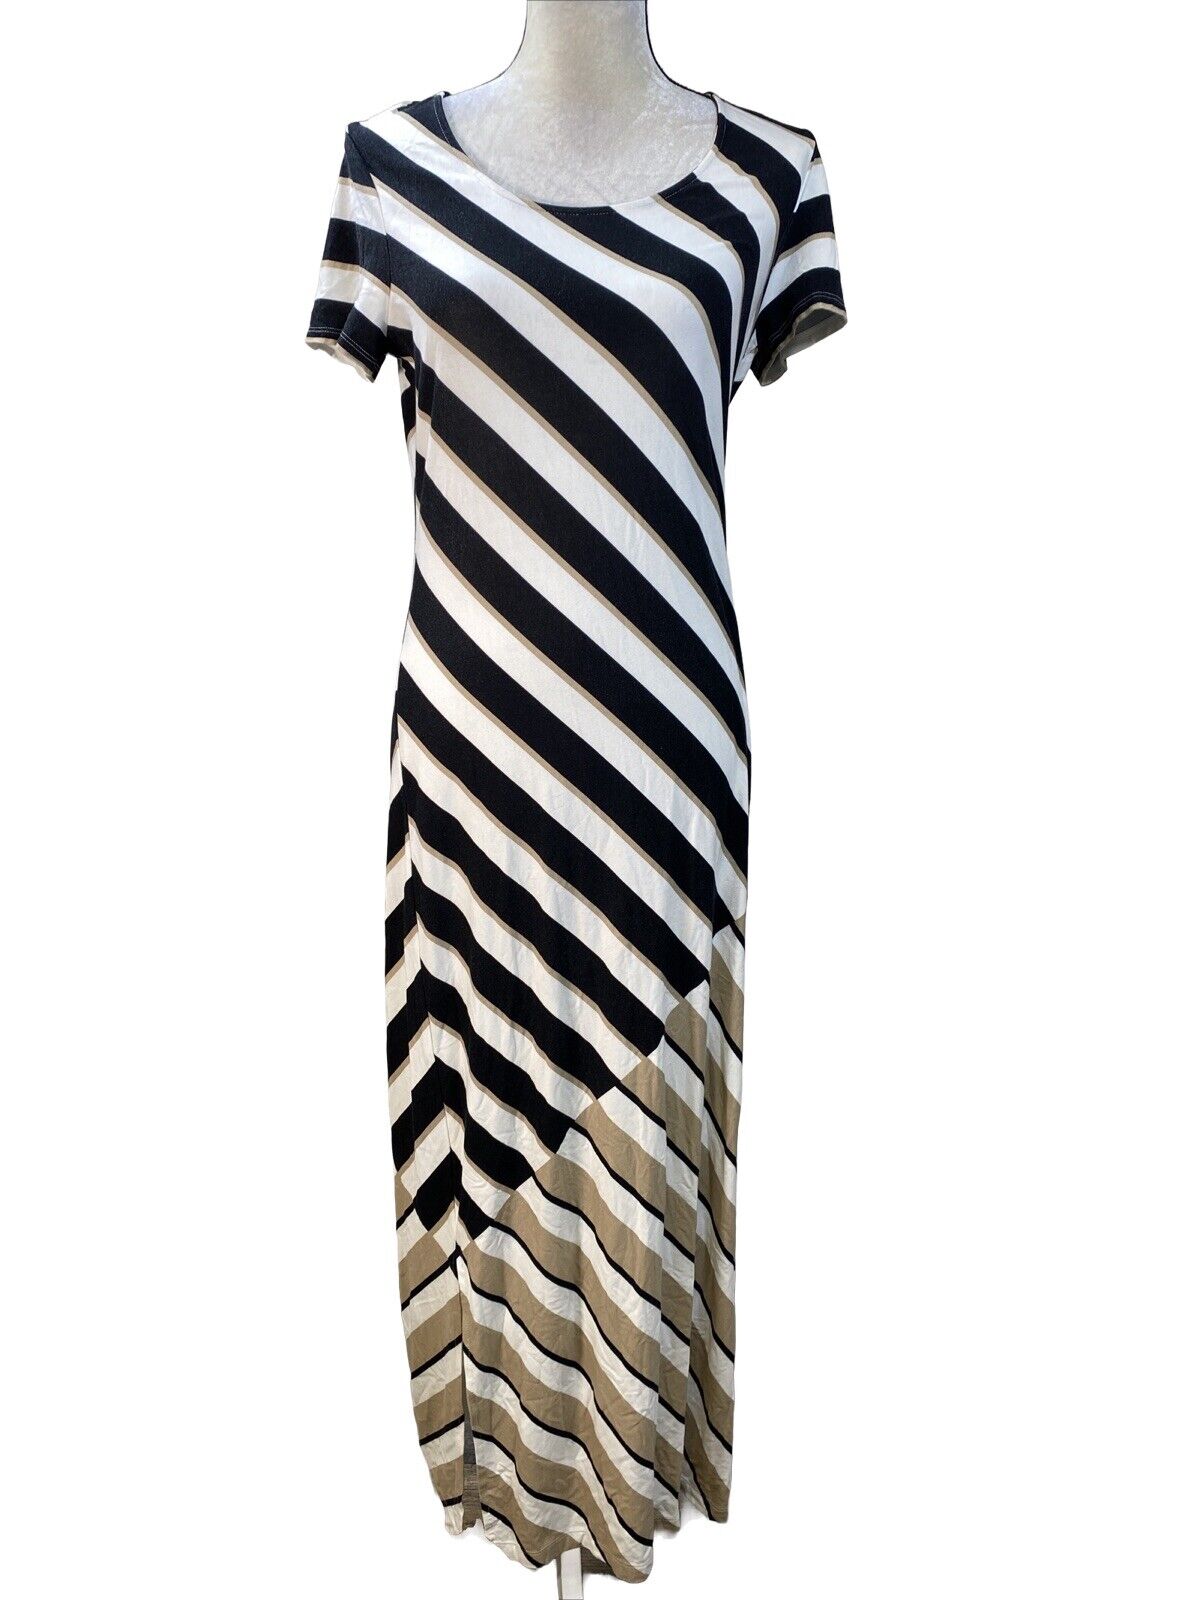 Chico's Zenergy Women's Black & Beige Striped Maxi Dress - 0/US 4